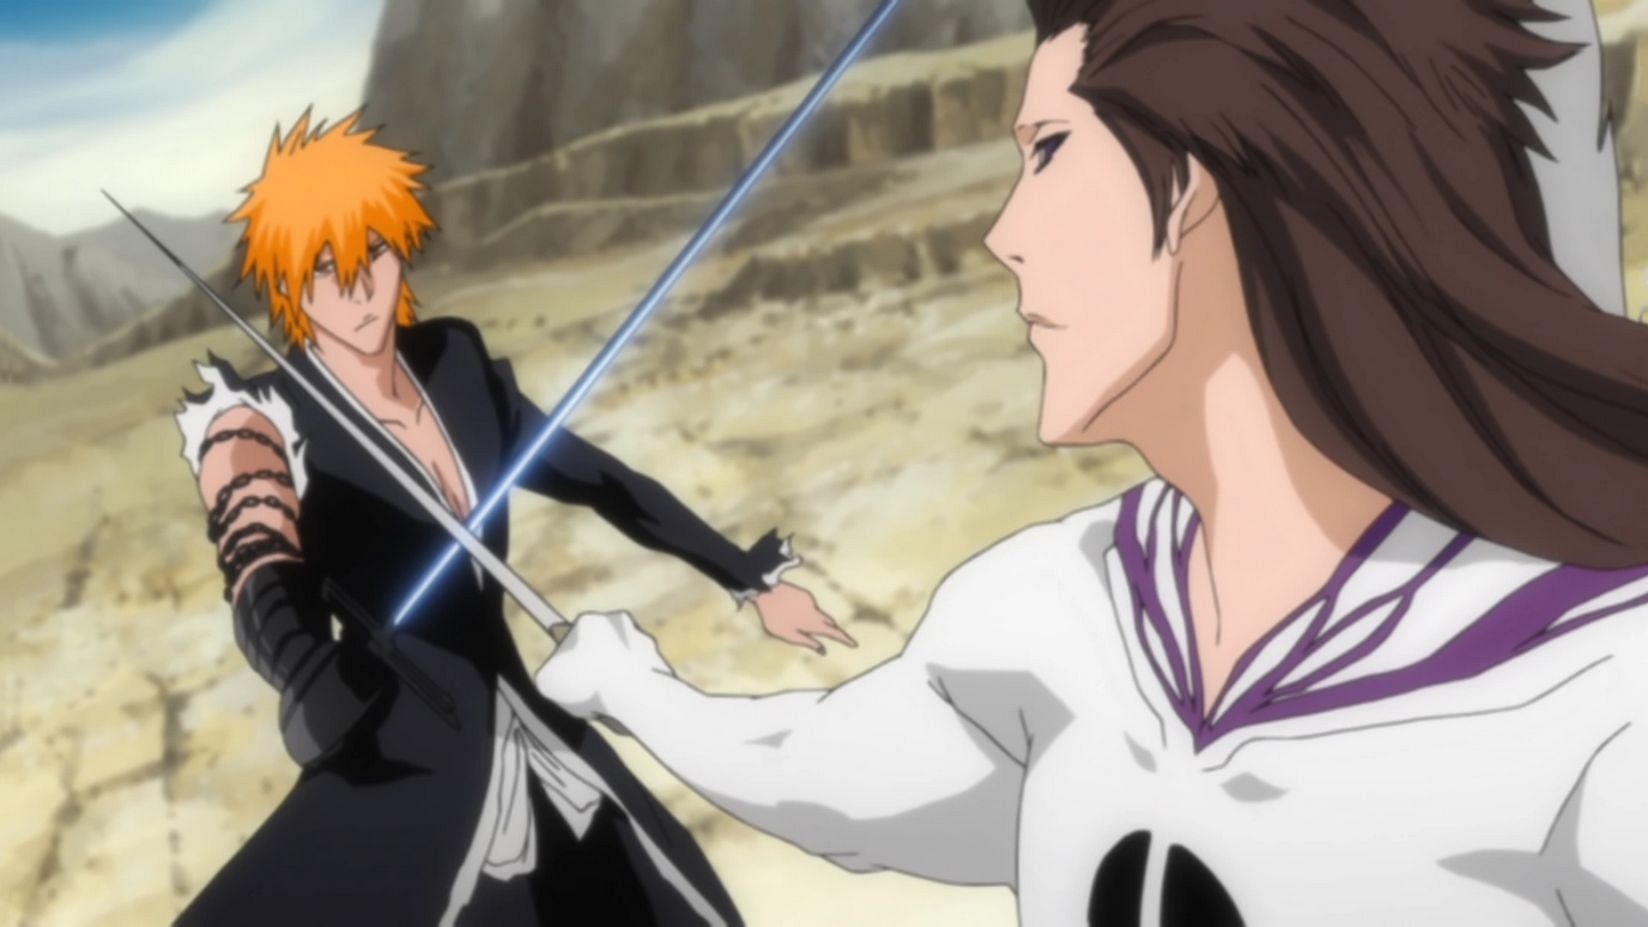 Ichigo vs. Aizen (Image via Studio Pierrot)